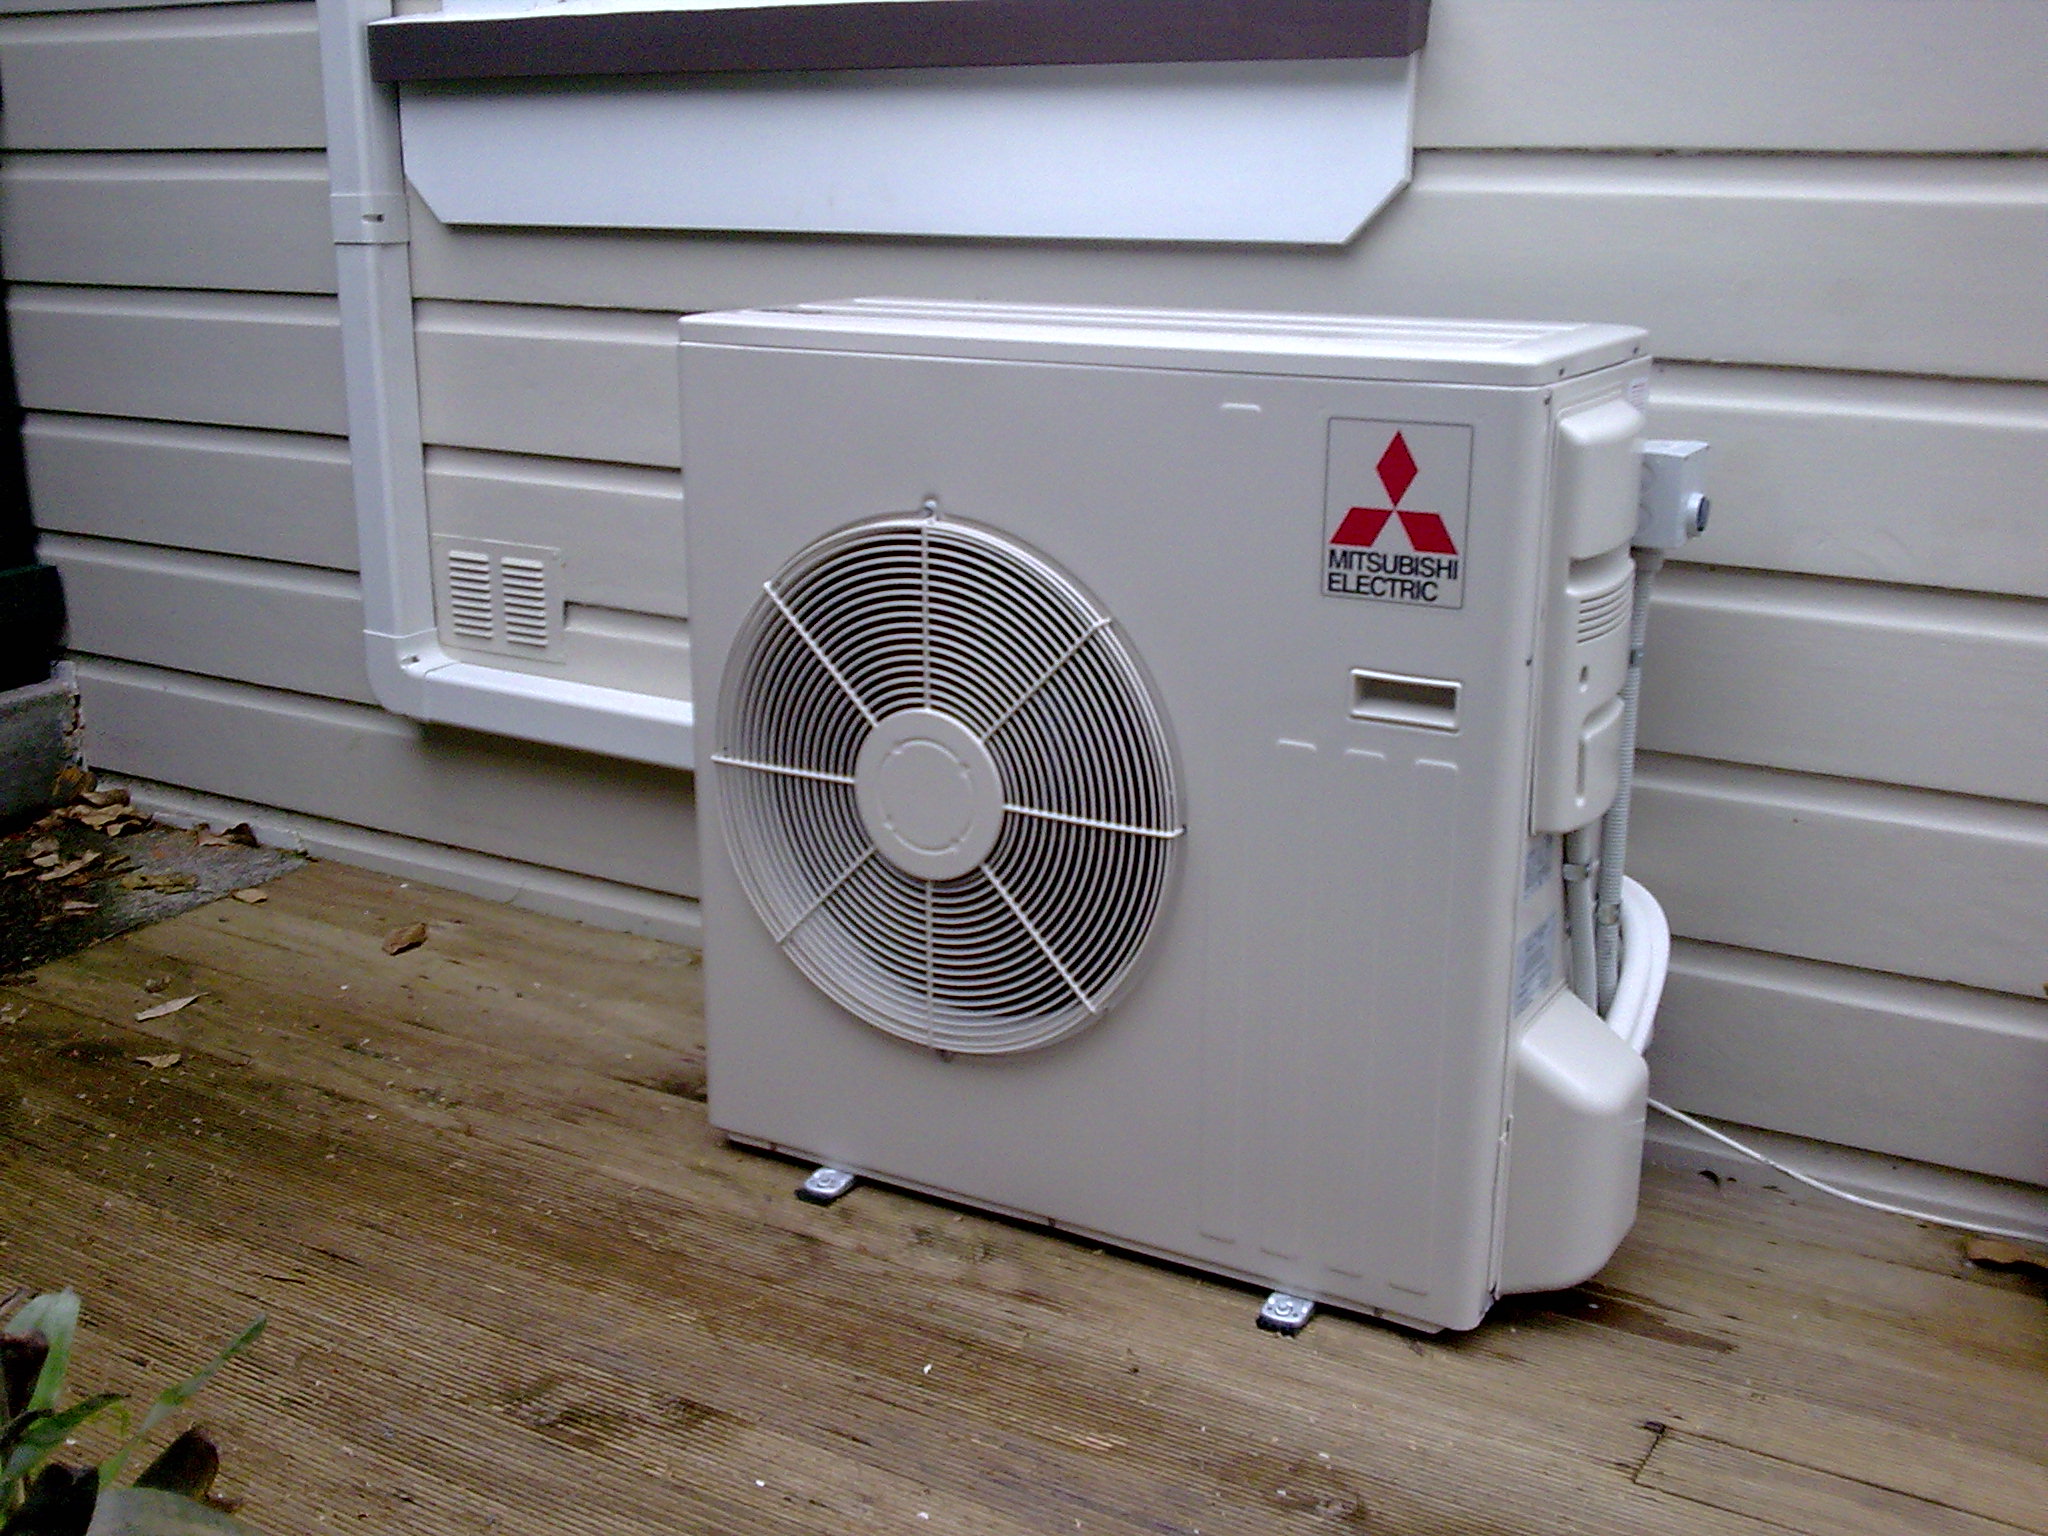 Mitsubishi electric air conditioner photo